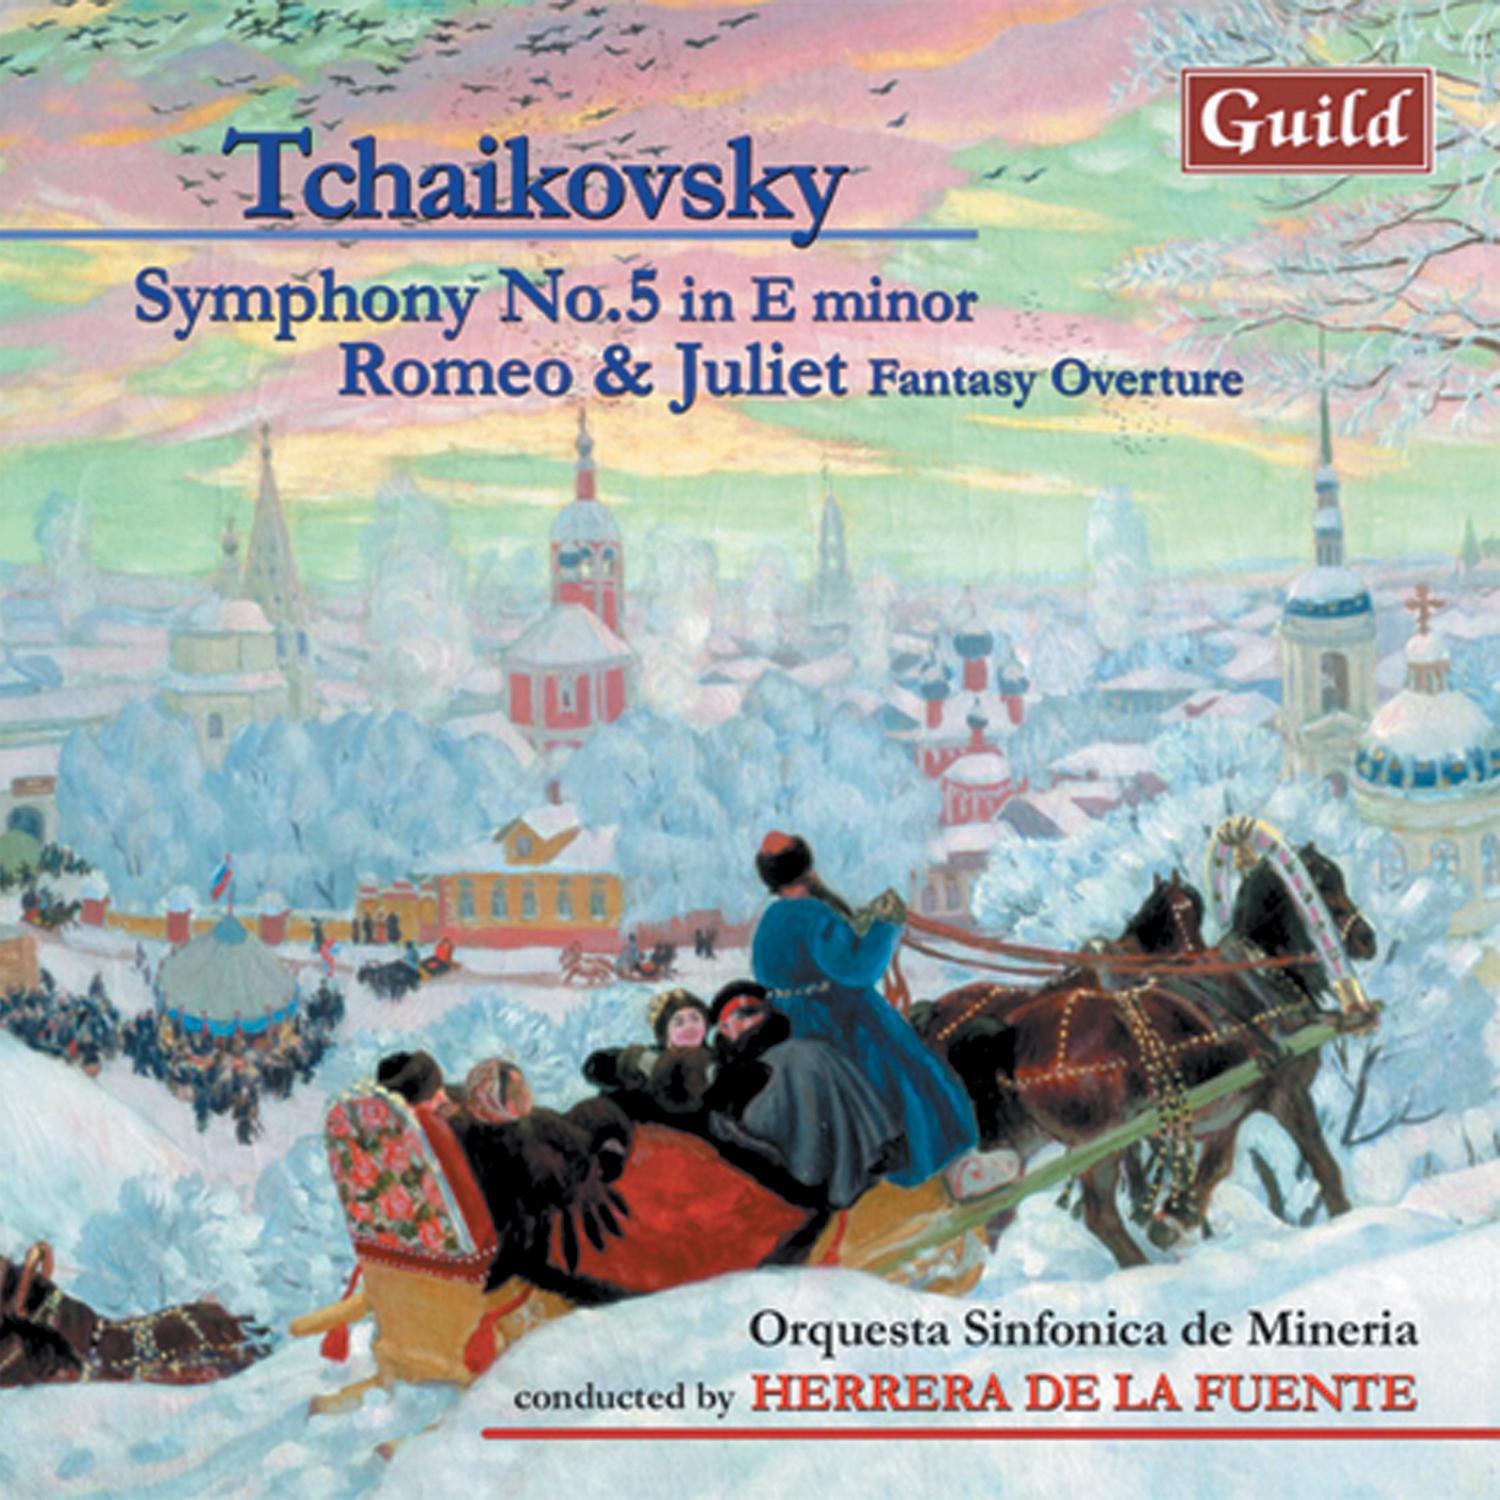 Tchaikovsky: Fantasy Overture Romeo & Juliet, Symphony No. 5 in E Minor